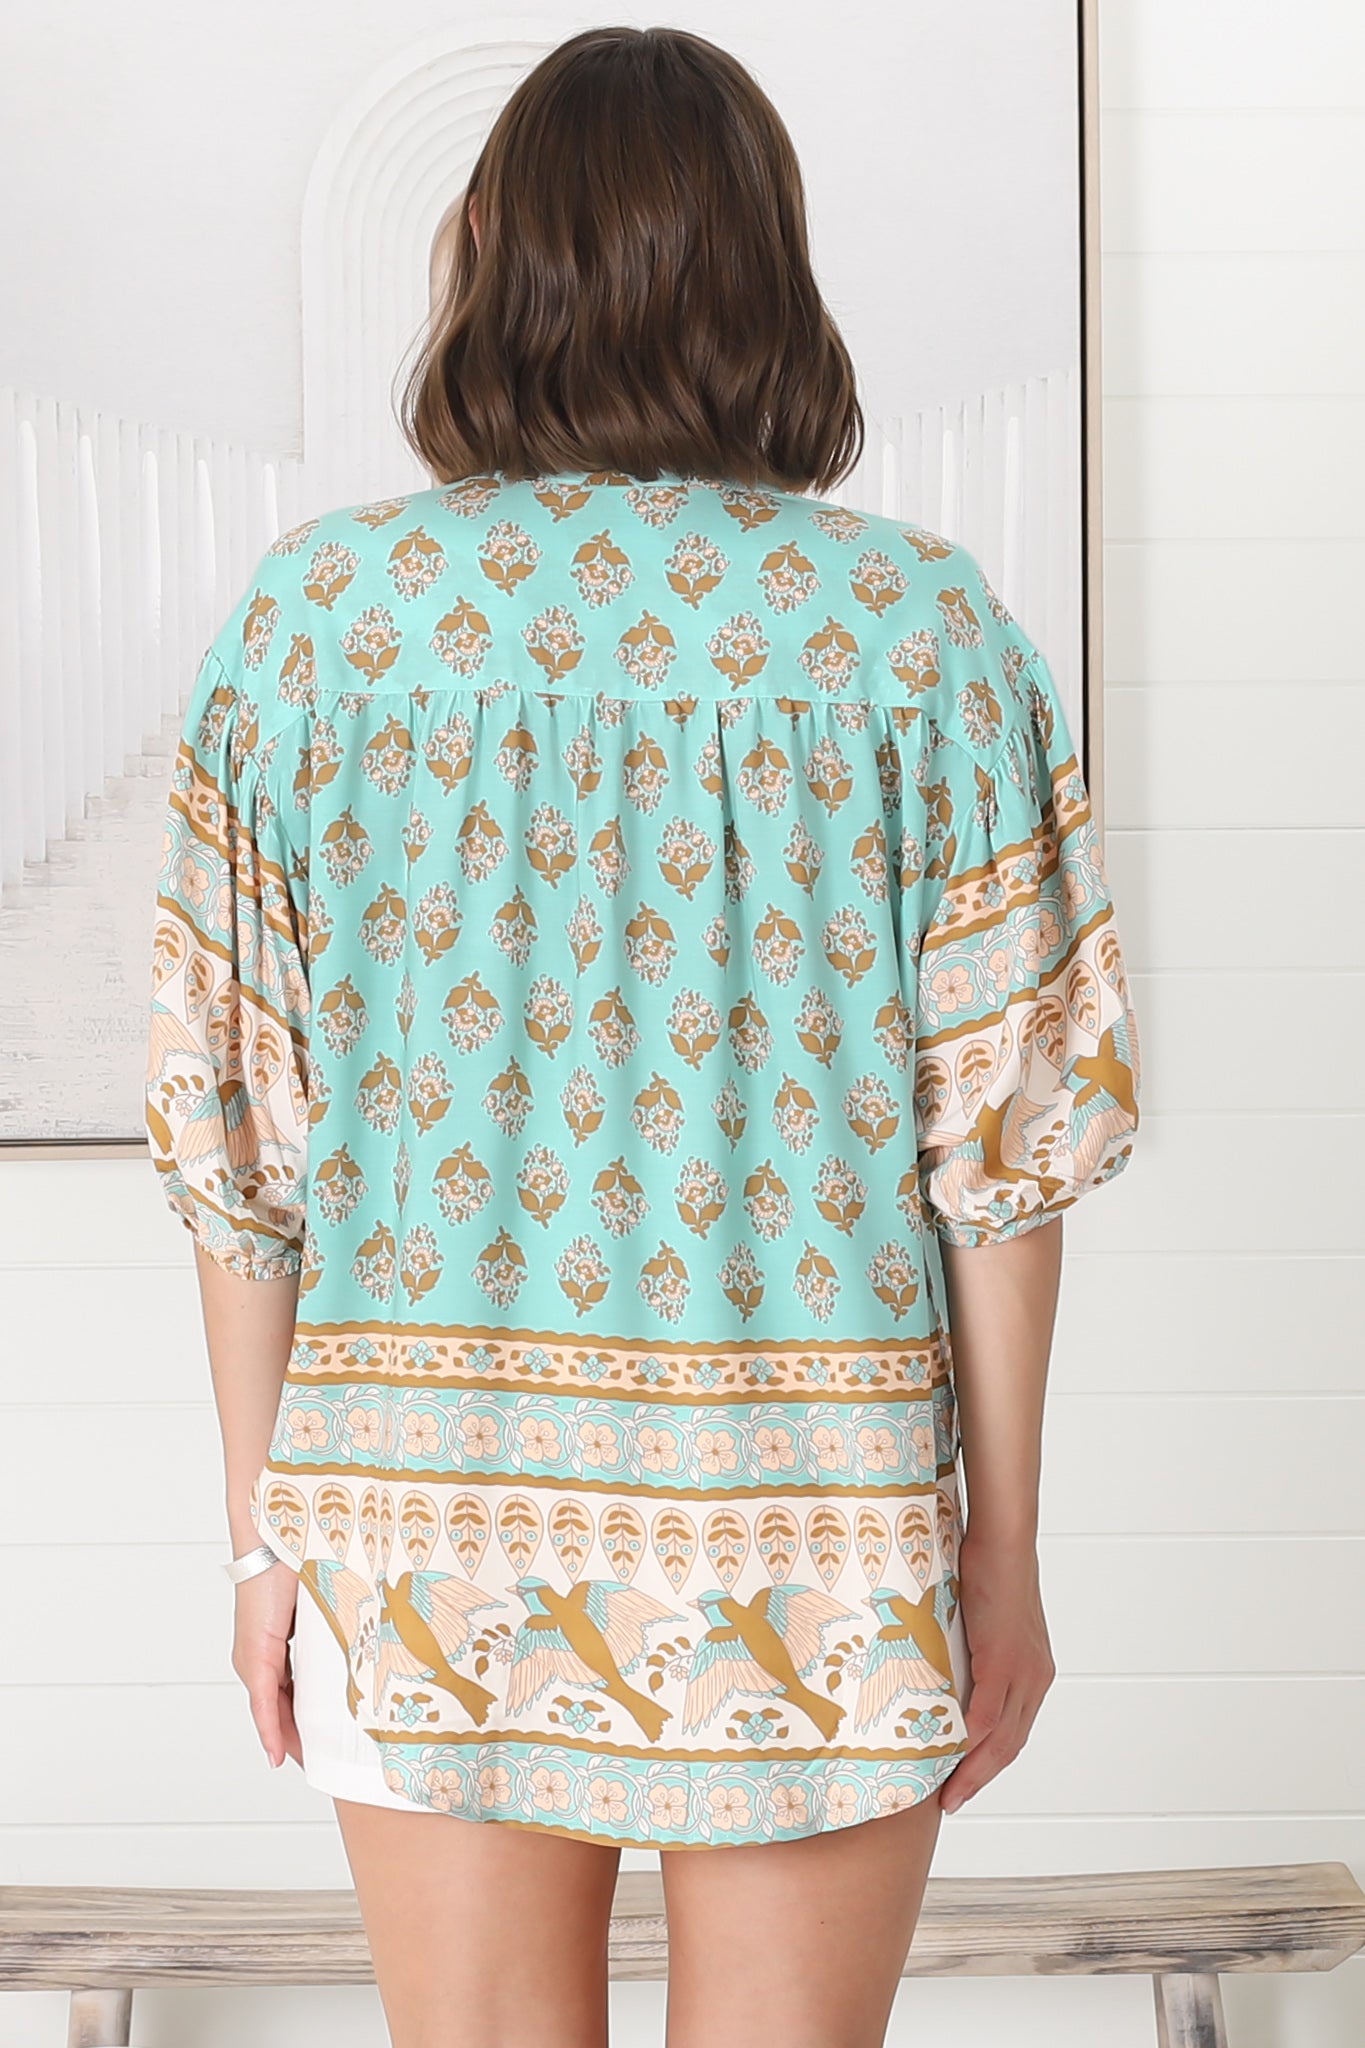 JAASE - Gypsea Blouse: Mandarin Collar Relaxed Button Down Shirt with Balloon Sleeves in Aquarius Print